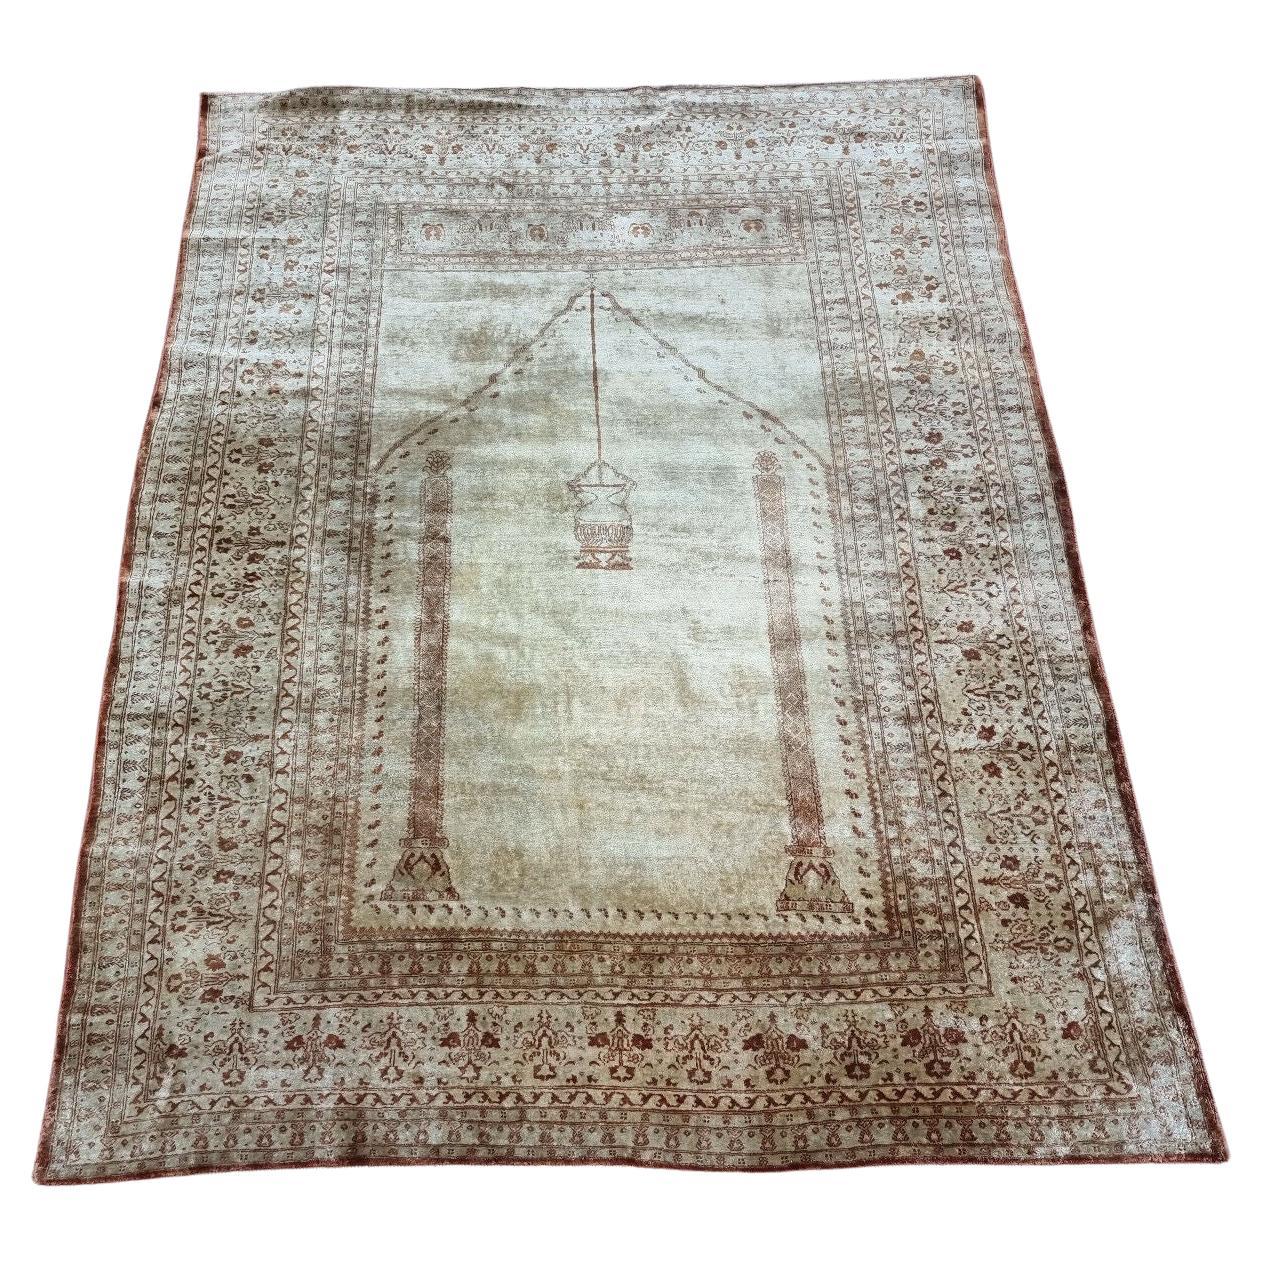 Handmade Antique Persian Style Tabriz Prayer Silk Rug 4' x 5.2', 1900s - 1D83 For Sale